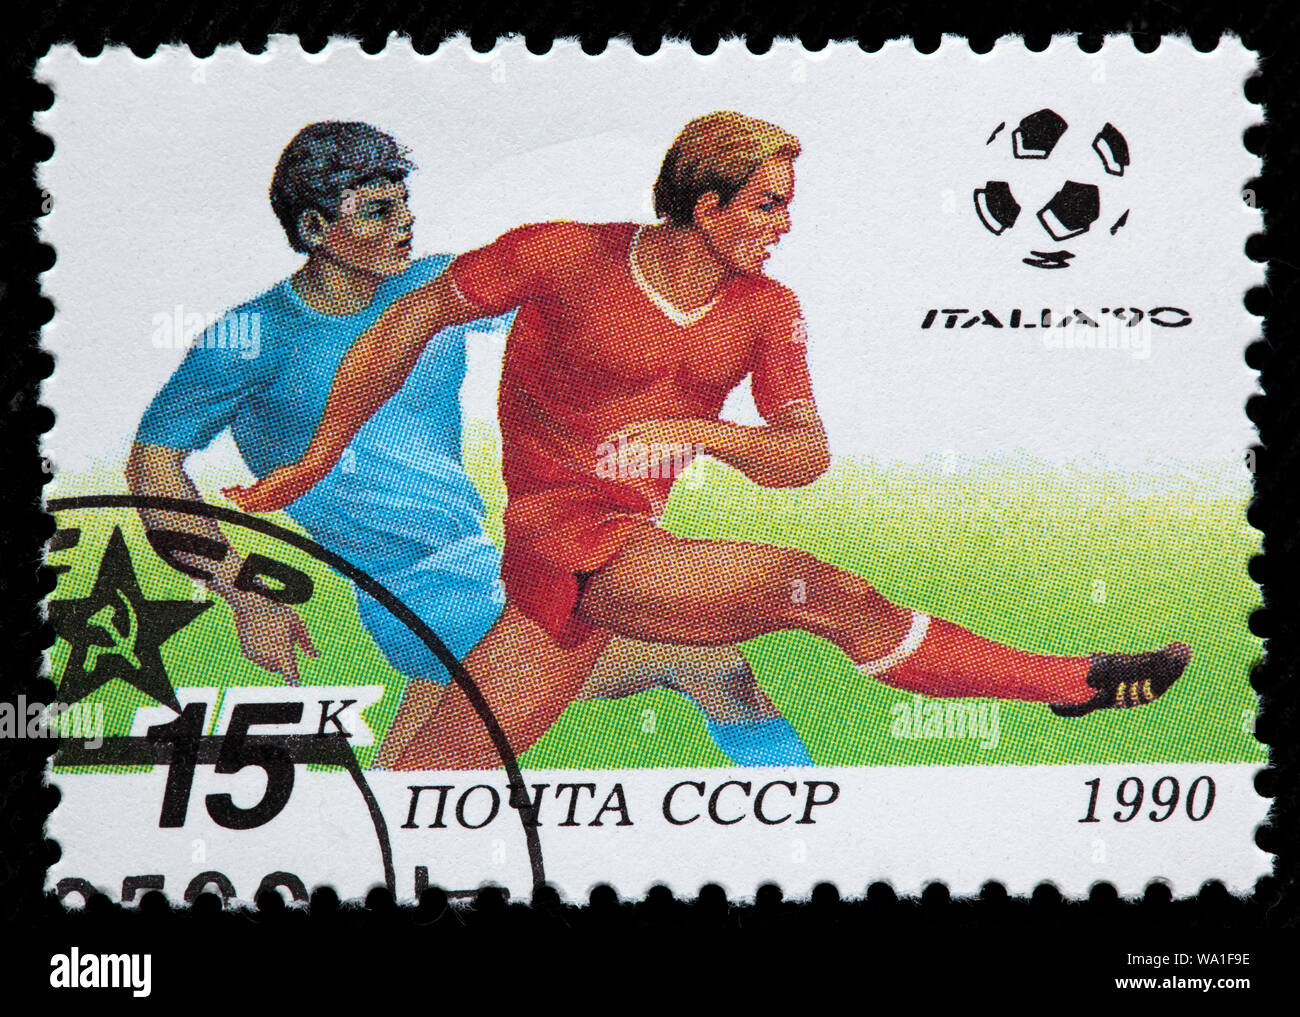 Fußball, Fußball-WM, Italien 1990, Briefmarke, Russland, UDSSR, 1990 Stockfoto